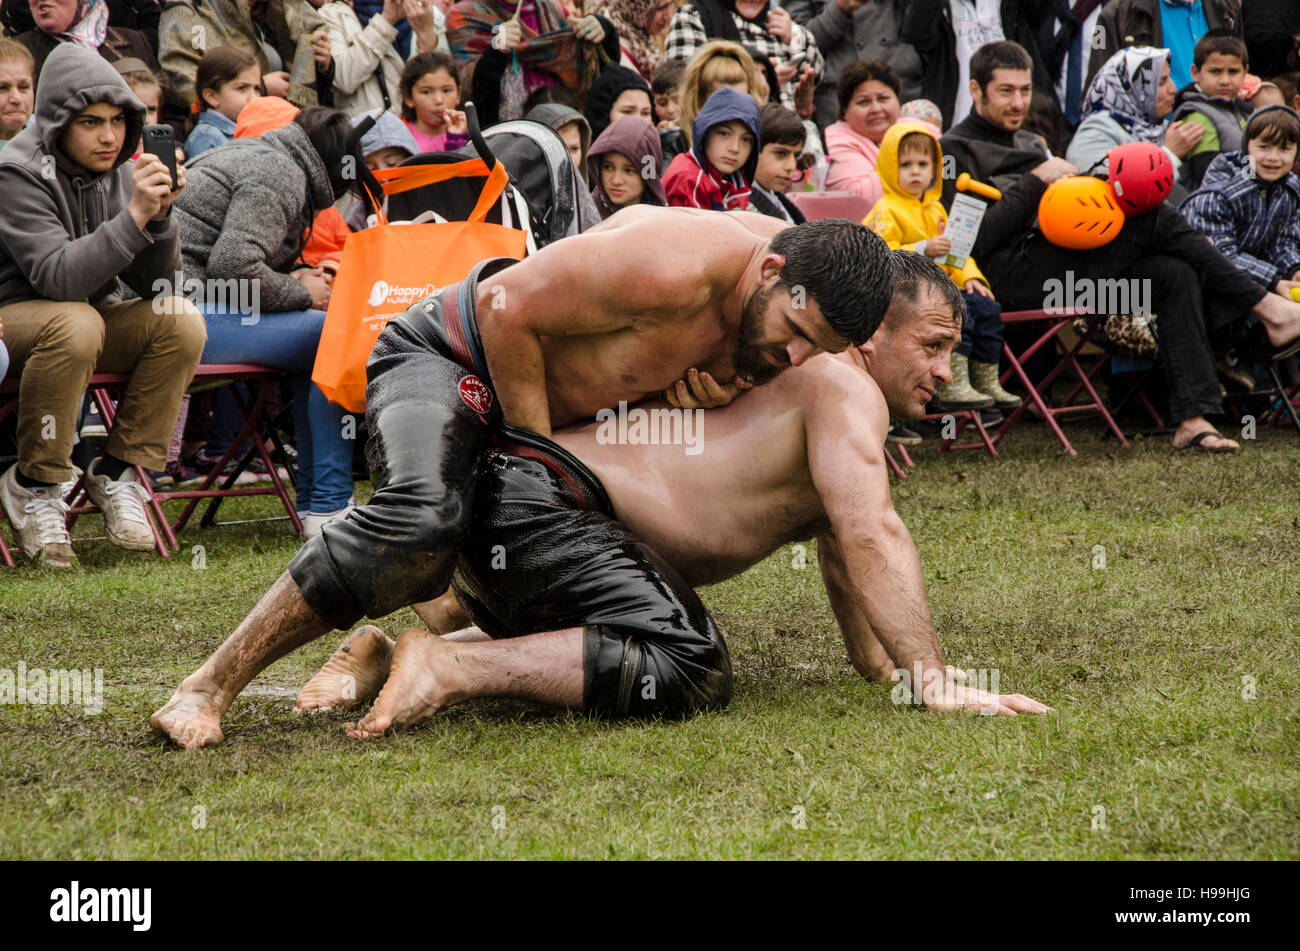 turkish-oil-wrestlerswrestling-during-the-turkish-festival-in-london-H99HJG.jpg